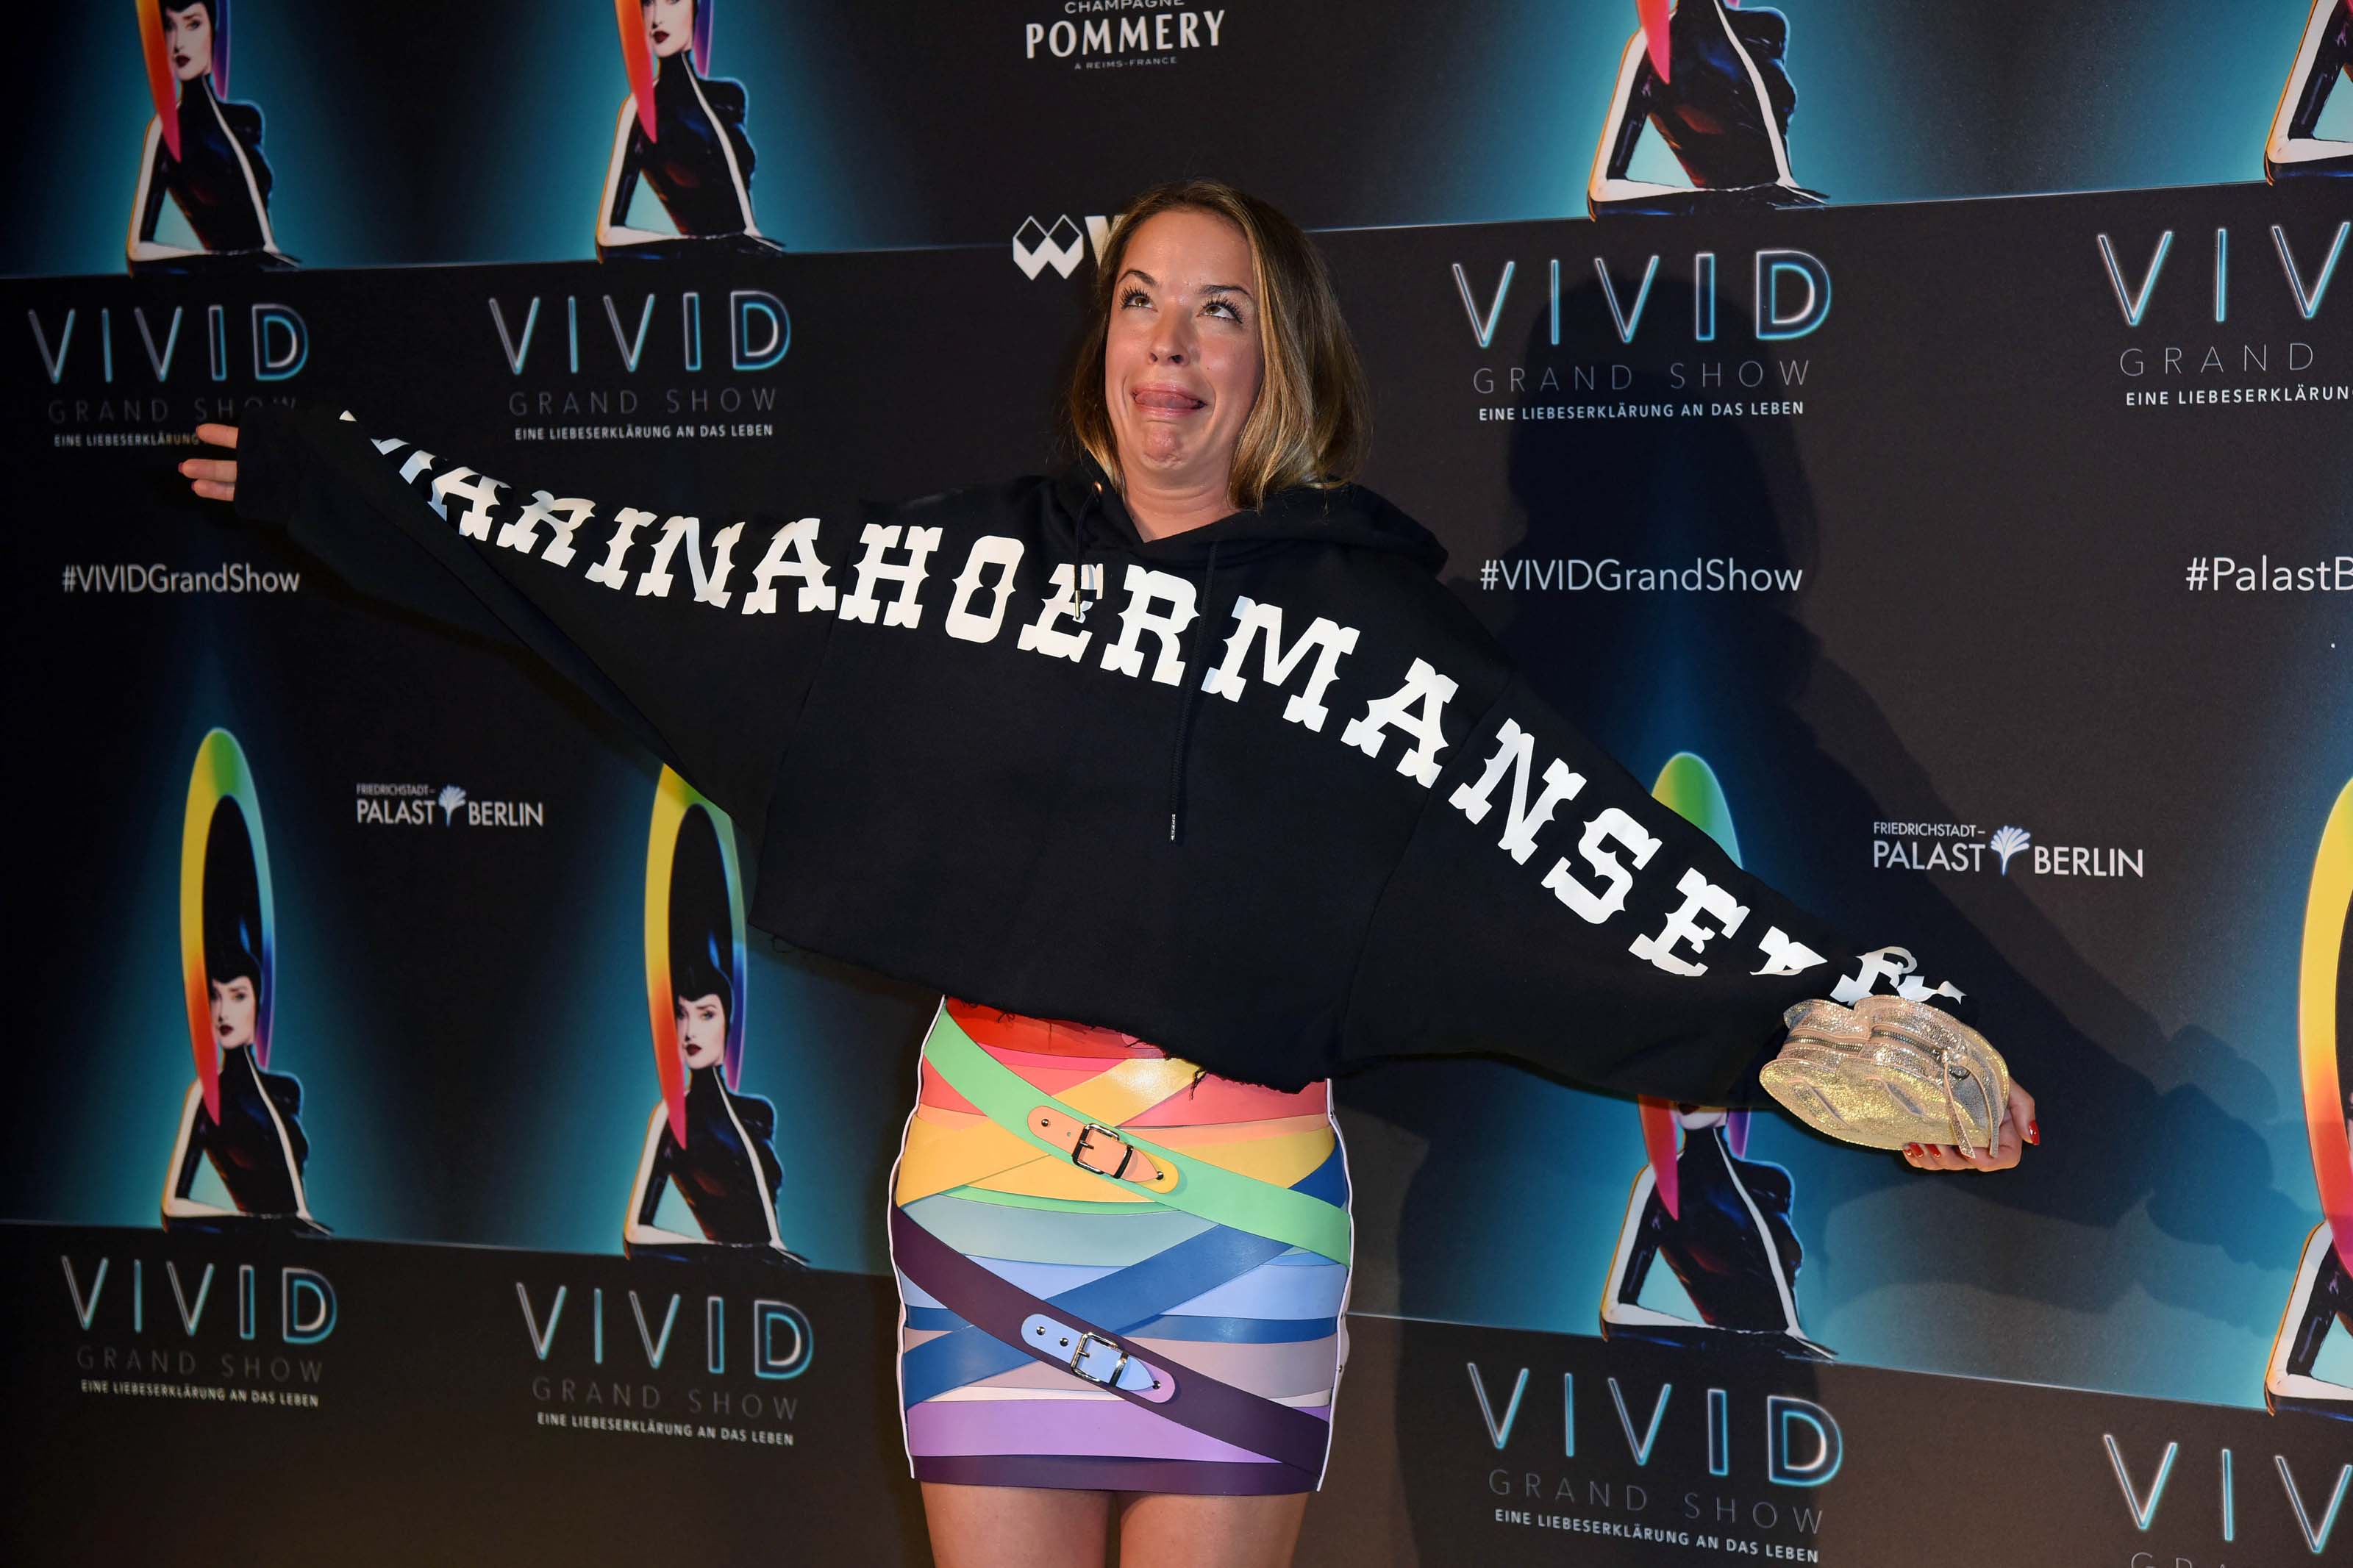 Marina Hoermanseder attends VIVID Grand Show